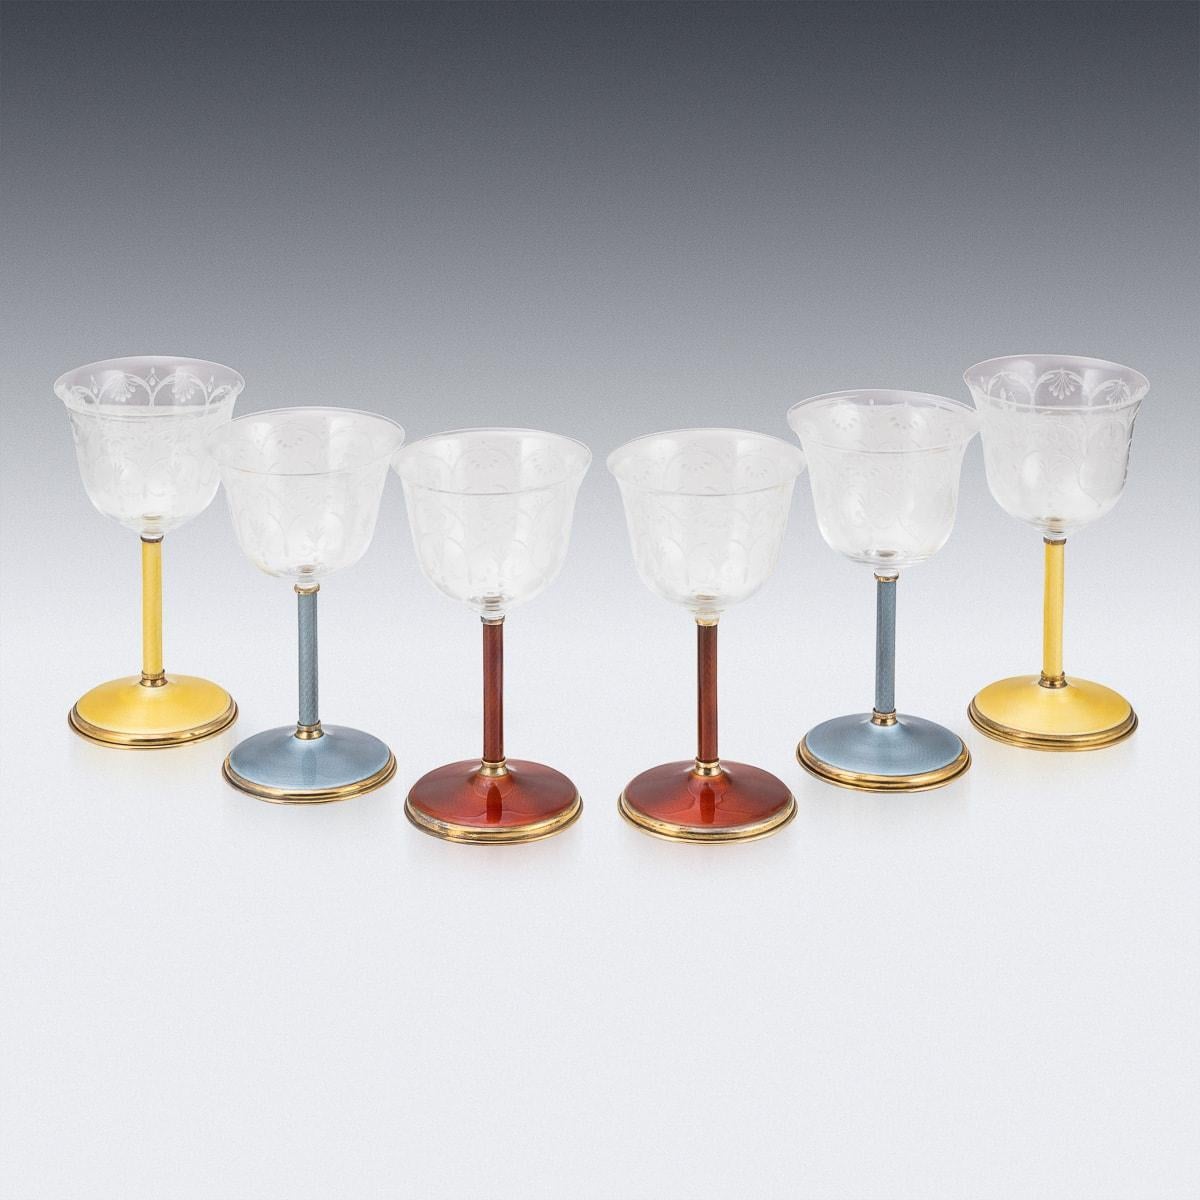 British 20th Century Silver Gilt, Enamel & Glass 6 Wine Goblets, Asprey, C.1970